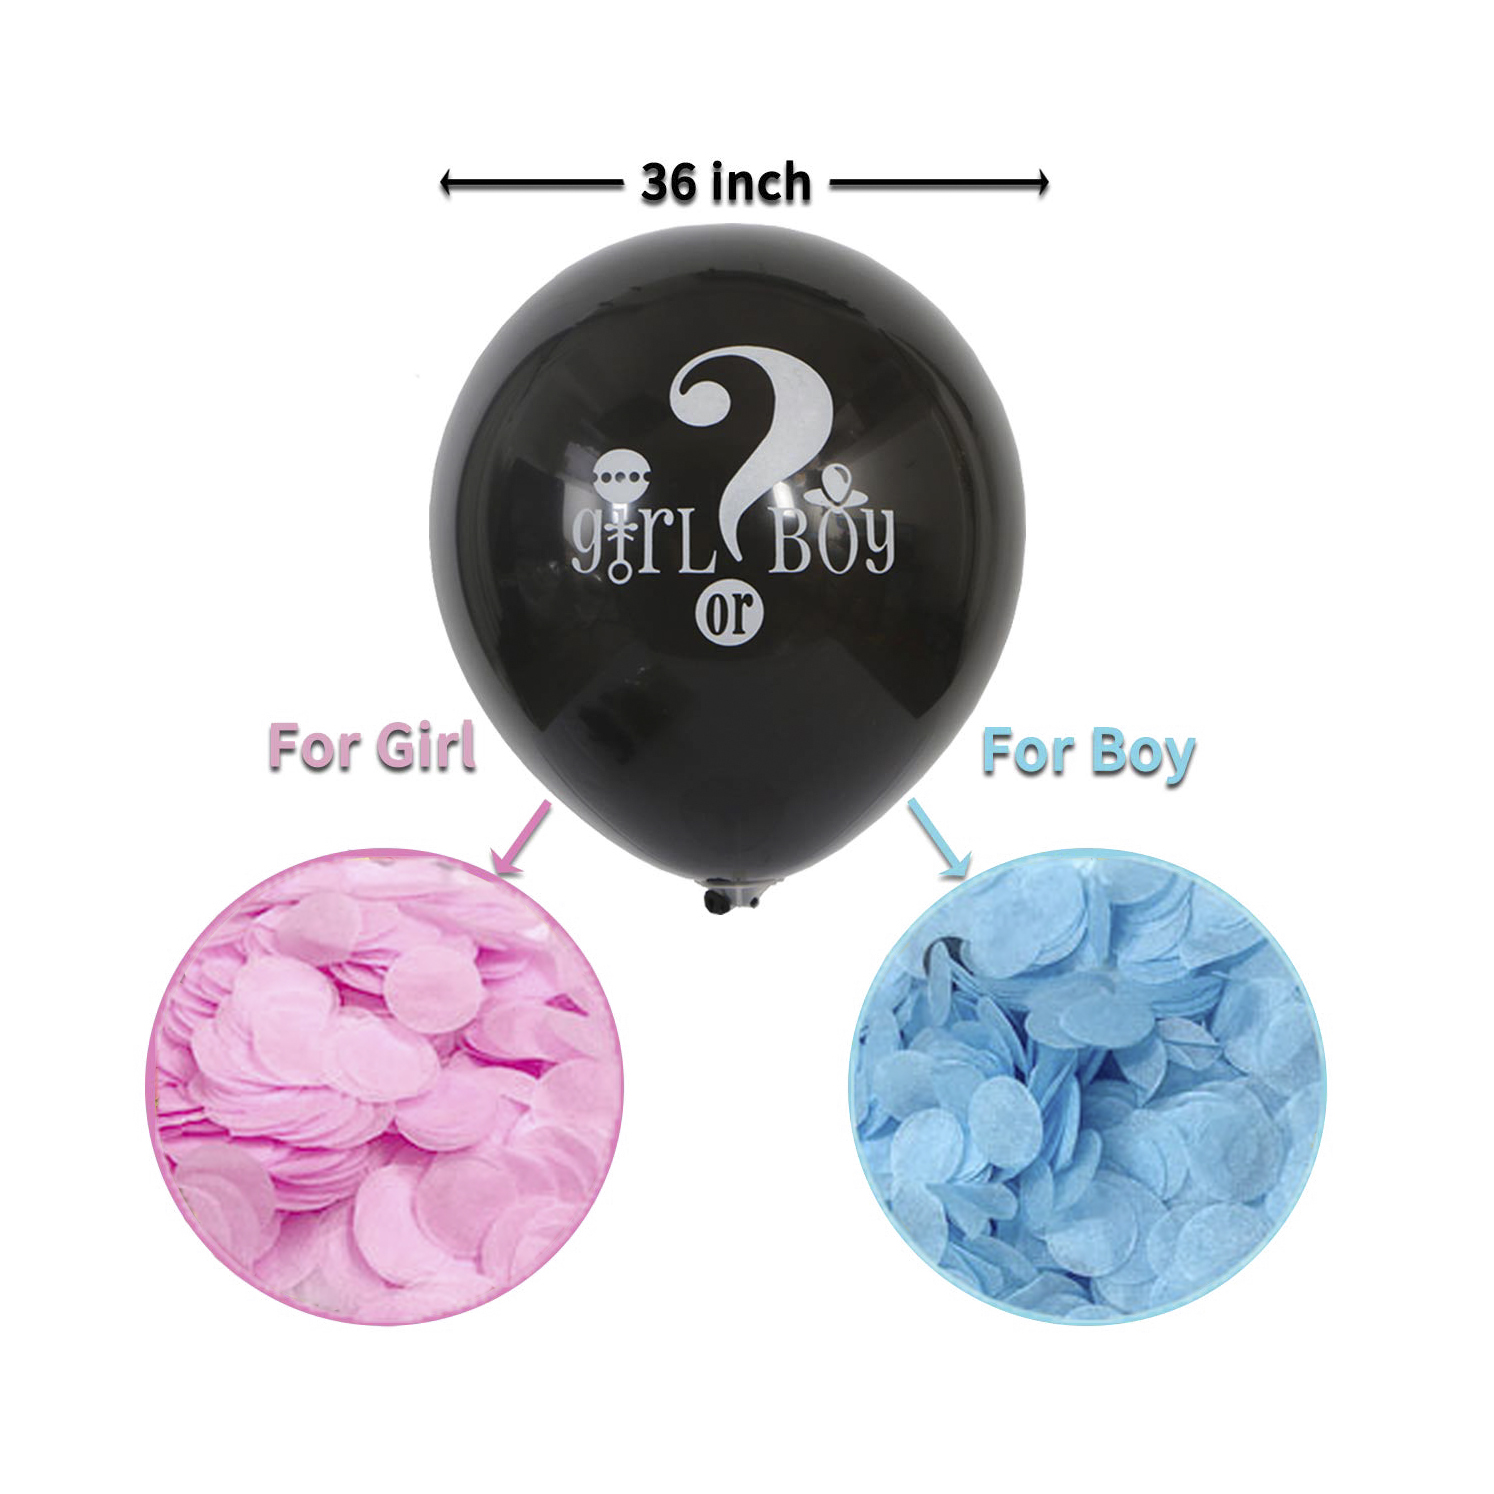 Boy or Girl Balloon - Black & White